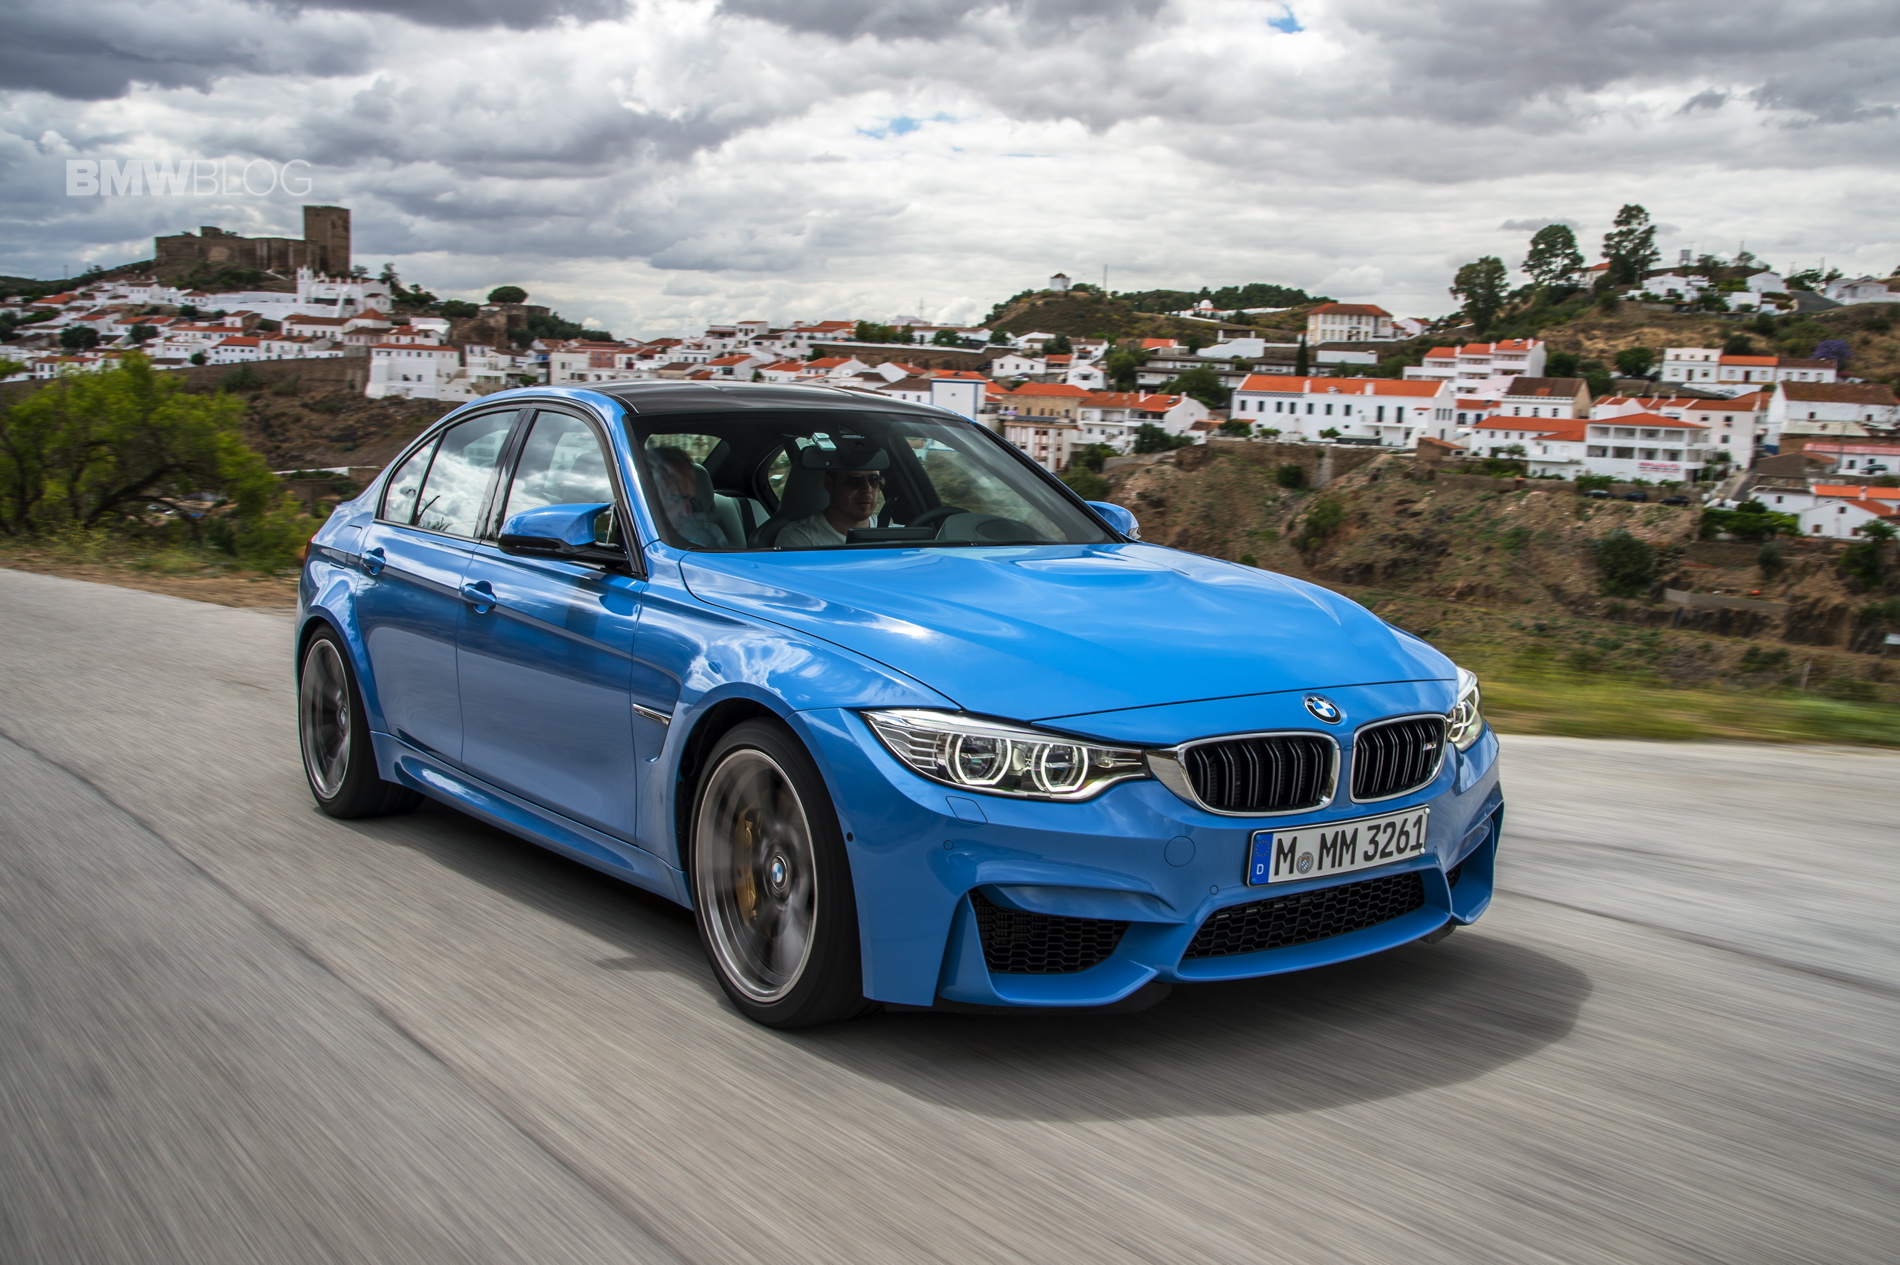 2015 BMW M3 Sedan and BMW M4 Coupe - BMWBLOG Test Drive